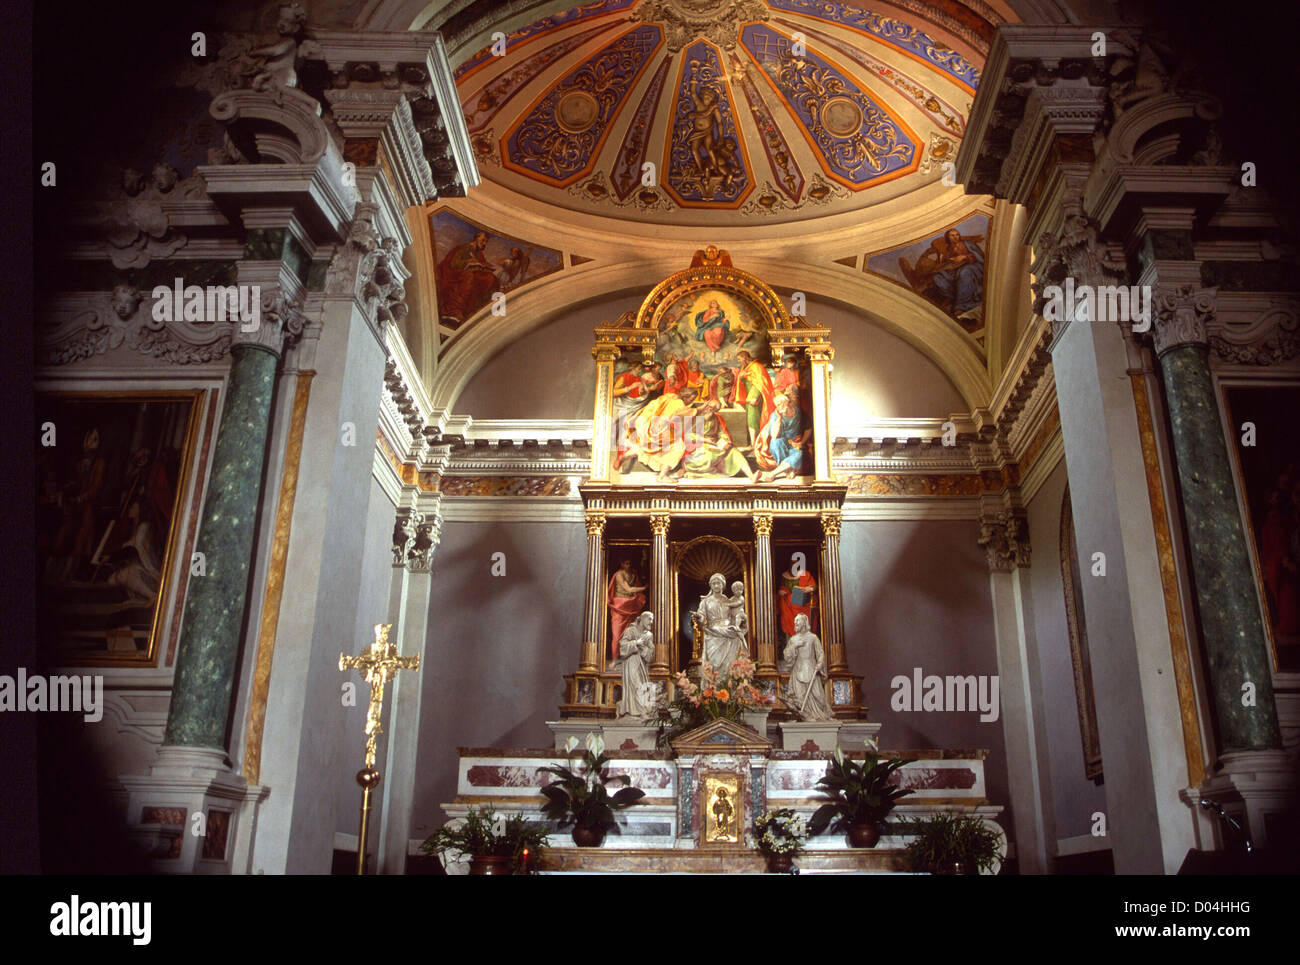 El altar el museo d'Arte Sacra POPLIGIO Pistoia Toscana Italia Foto de stock